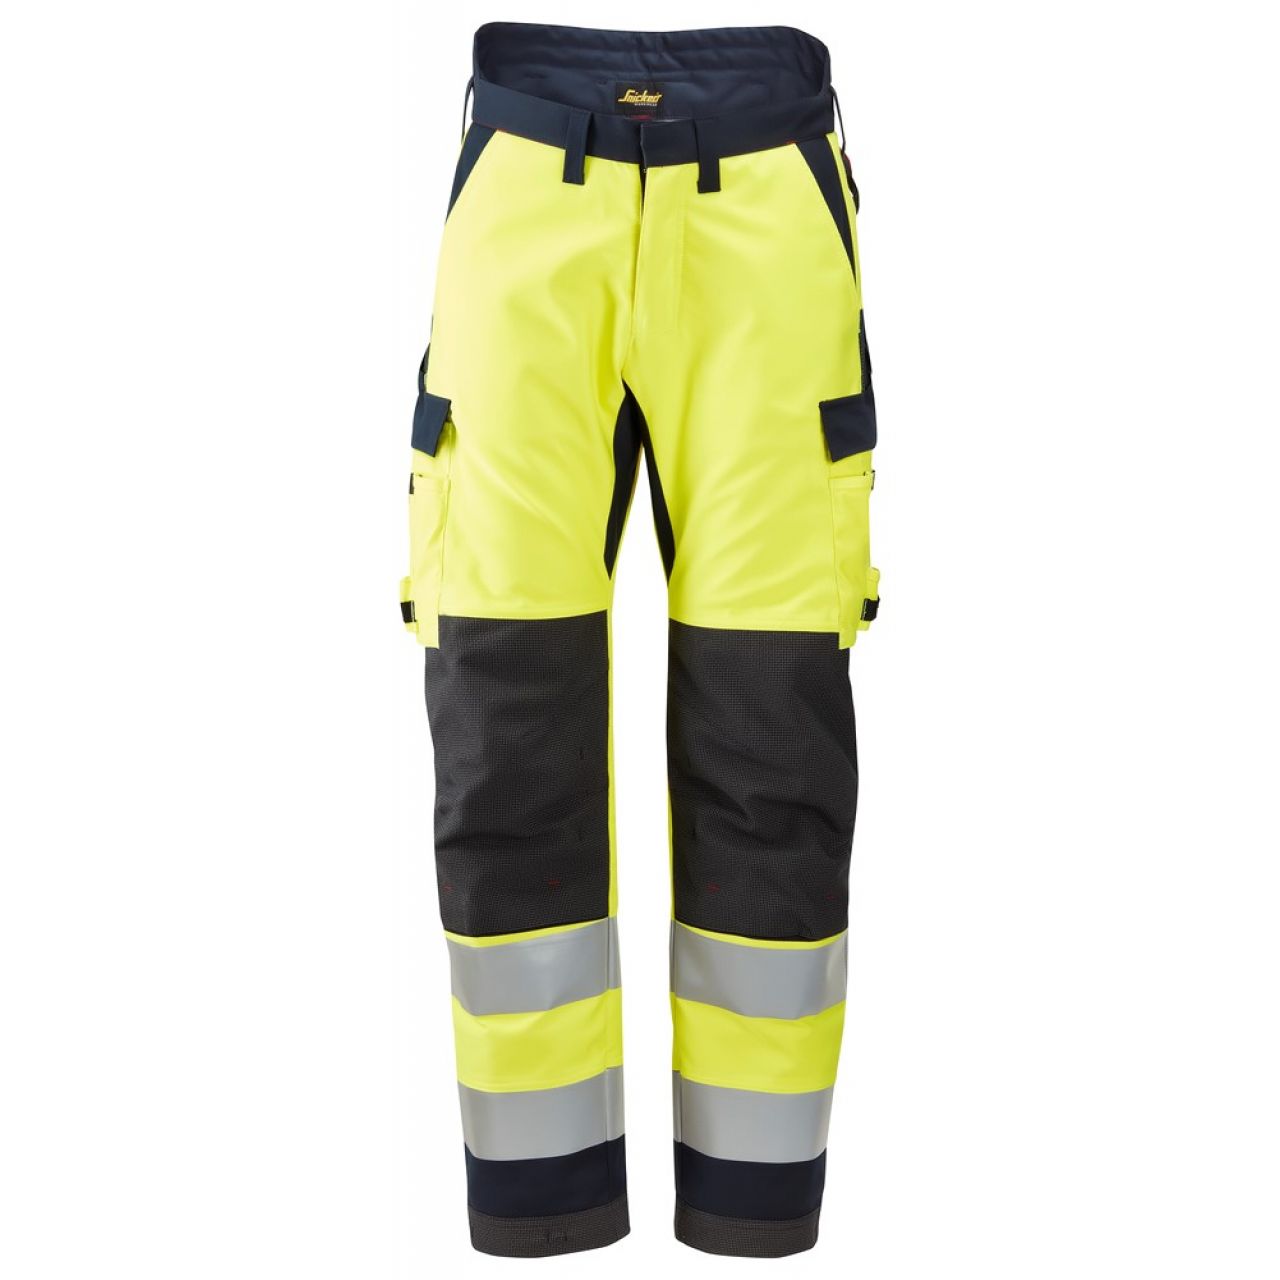 6663 Pantalones largos de trabajo aislantes 37.5® de alta visibiidad clase 2 ProtecWork amarillo-azul marino talla 88